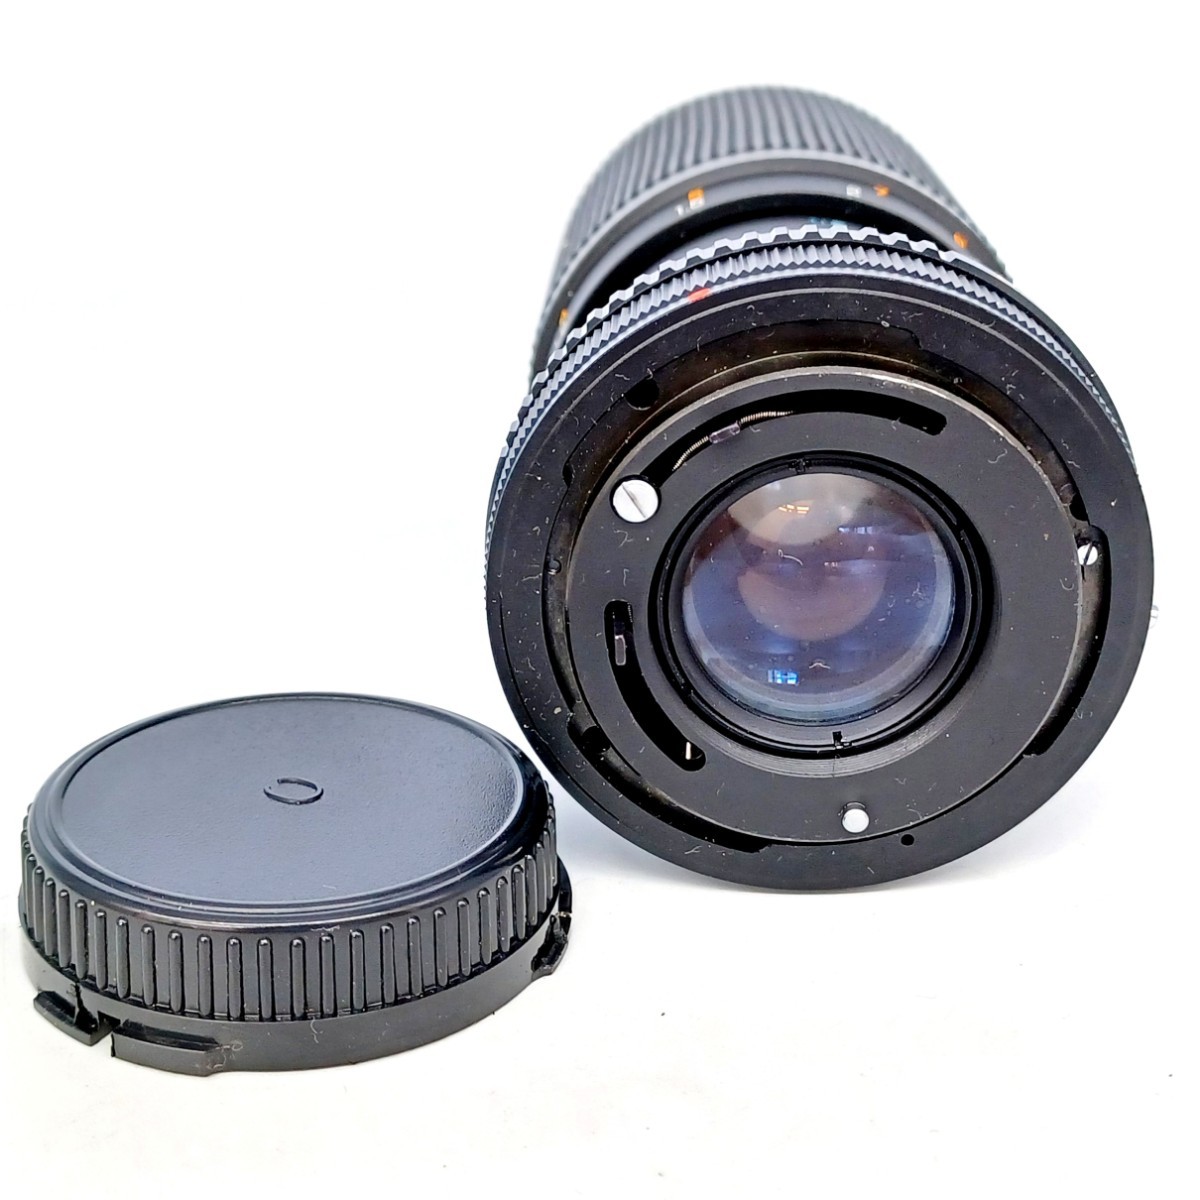 CIMKO MT SERIES シムコ MTシリーズ カメラレンズ 1:4.5 f=80-200mm Φ52 MACRO/CLOSE UP カメラ  レンズ 箱付き WK JChere雅虎拍卖代购